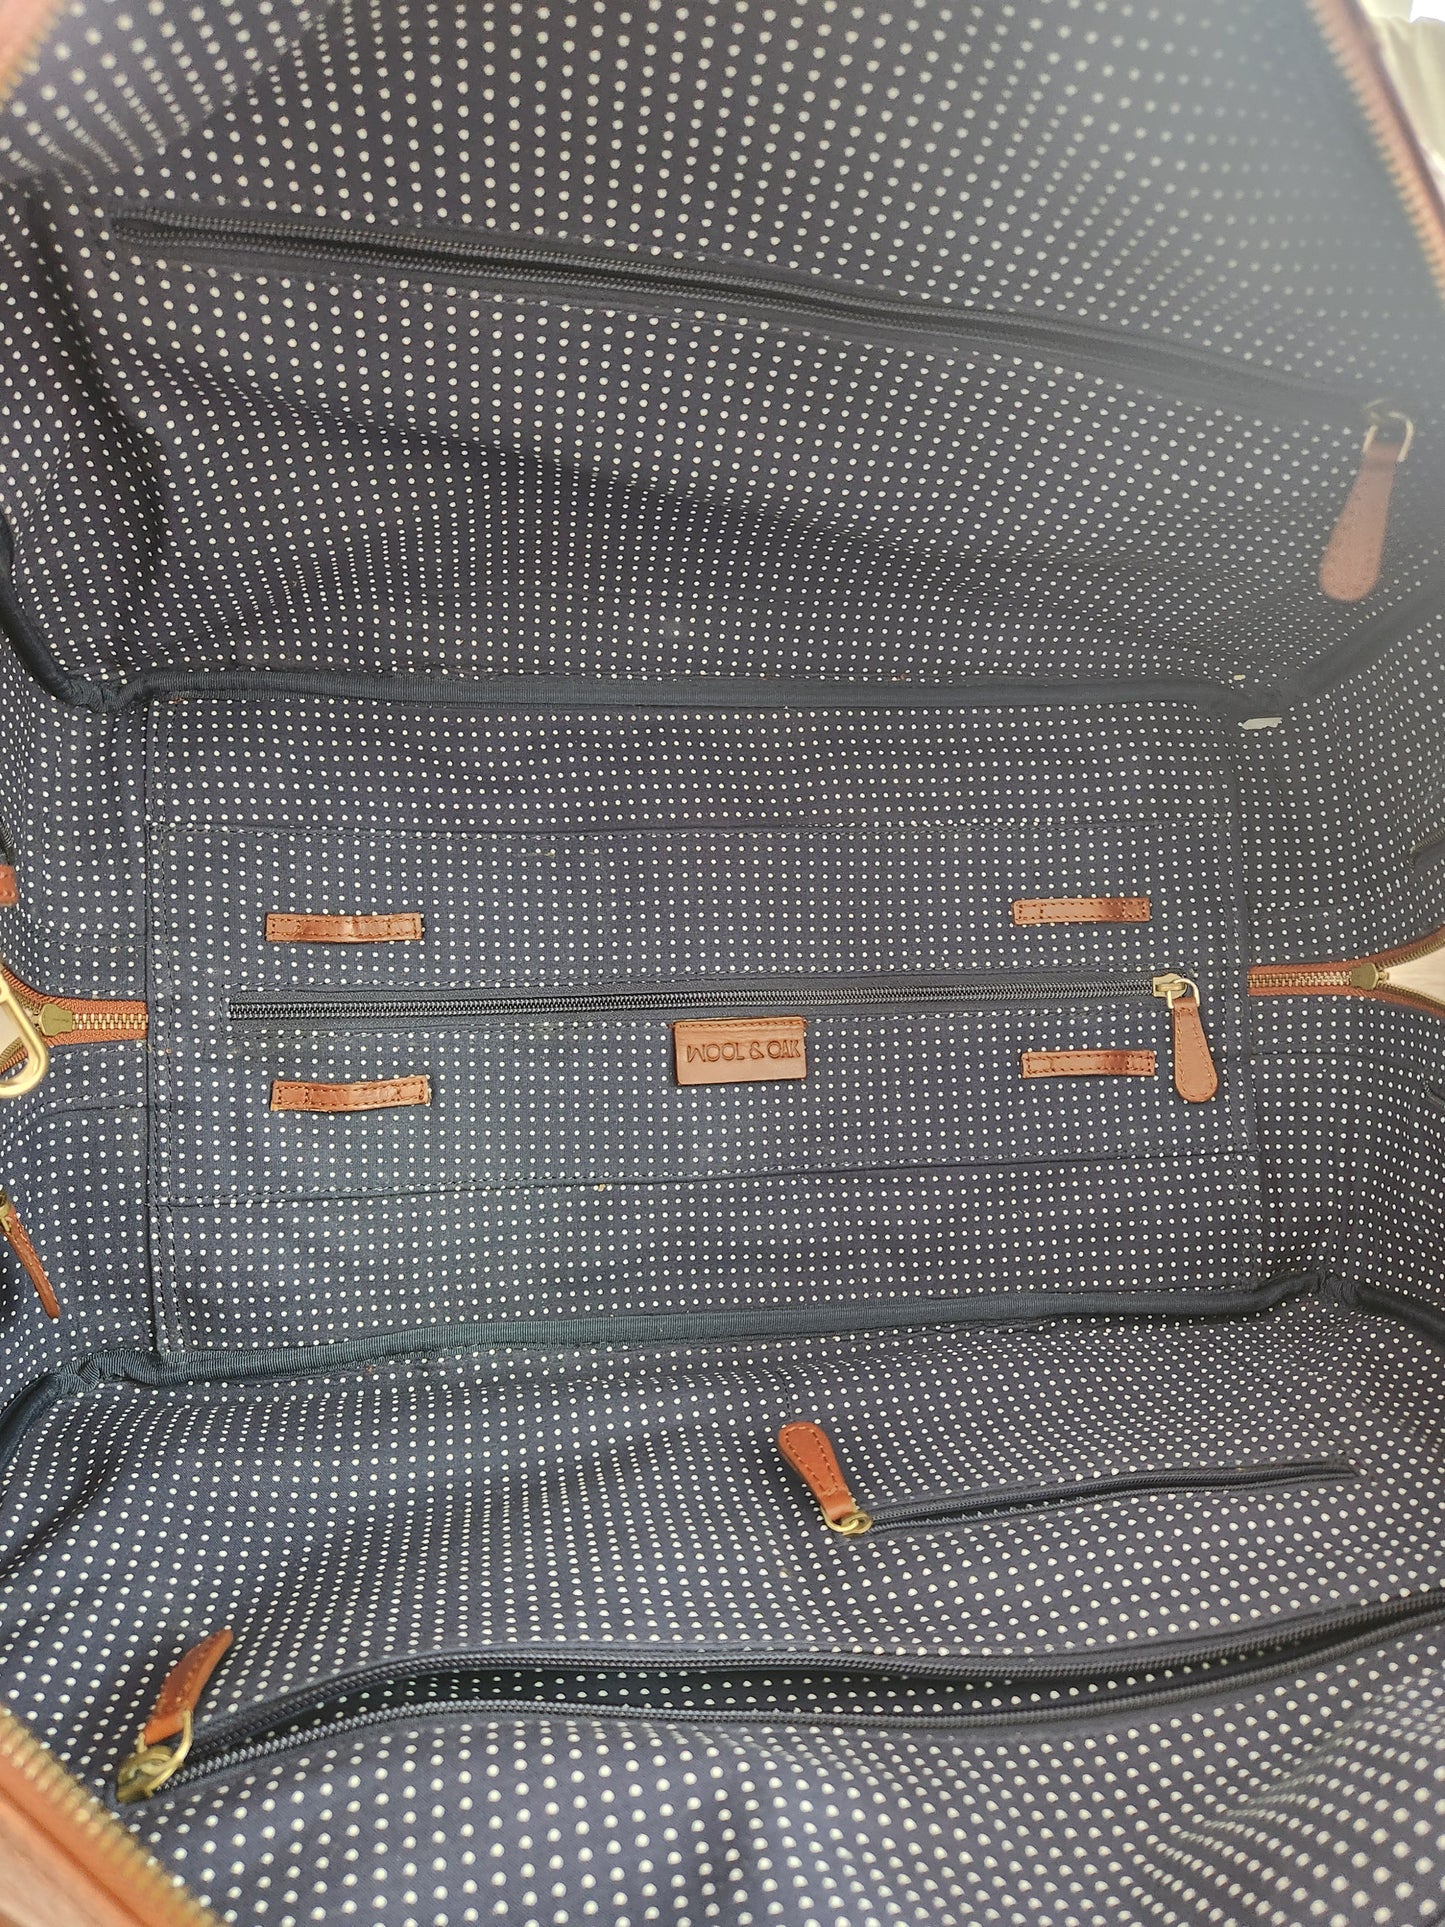 Wool & Oak Brown Leather Duffle Suitcase